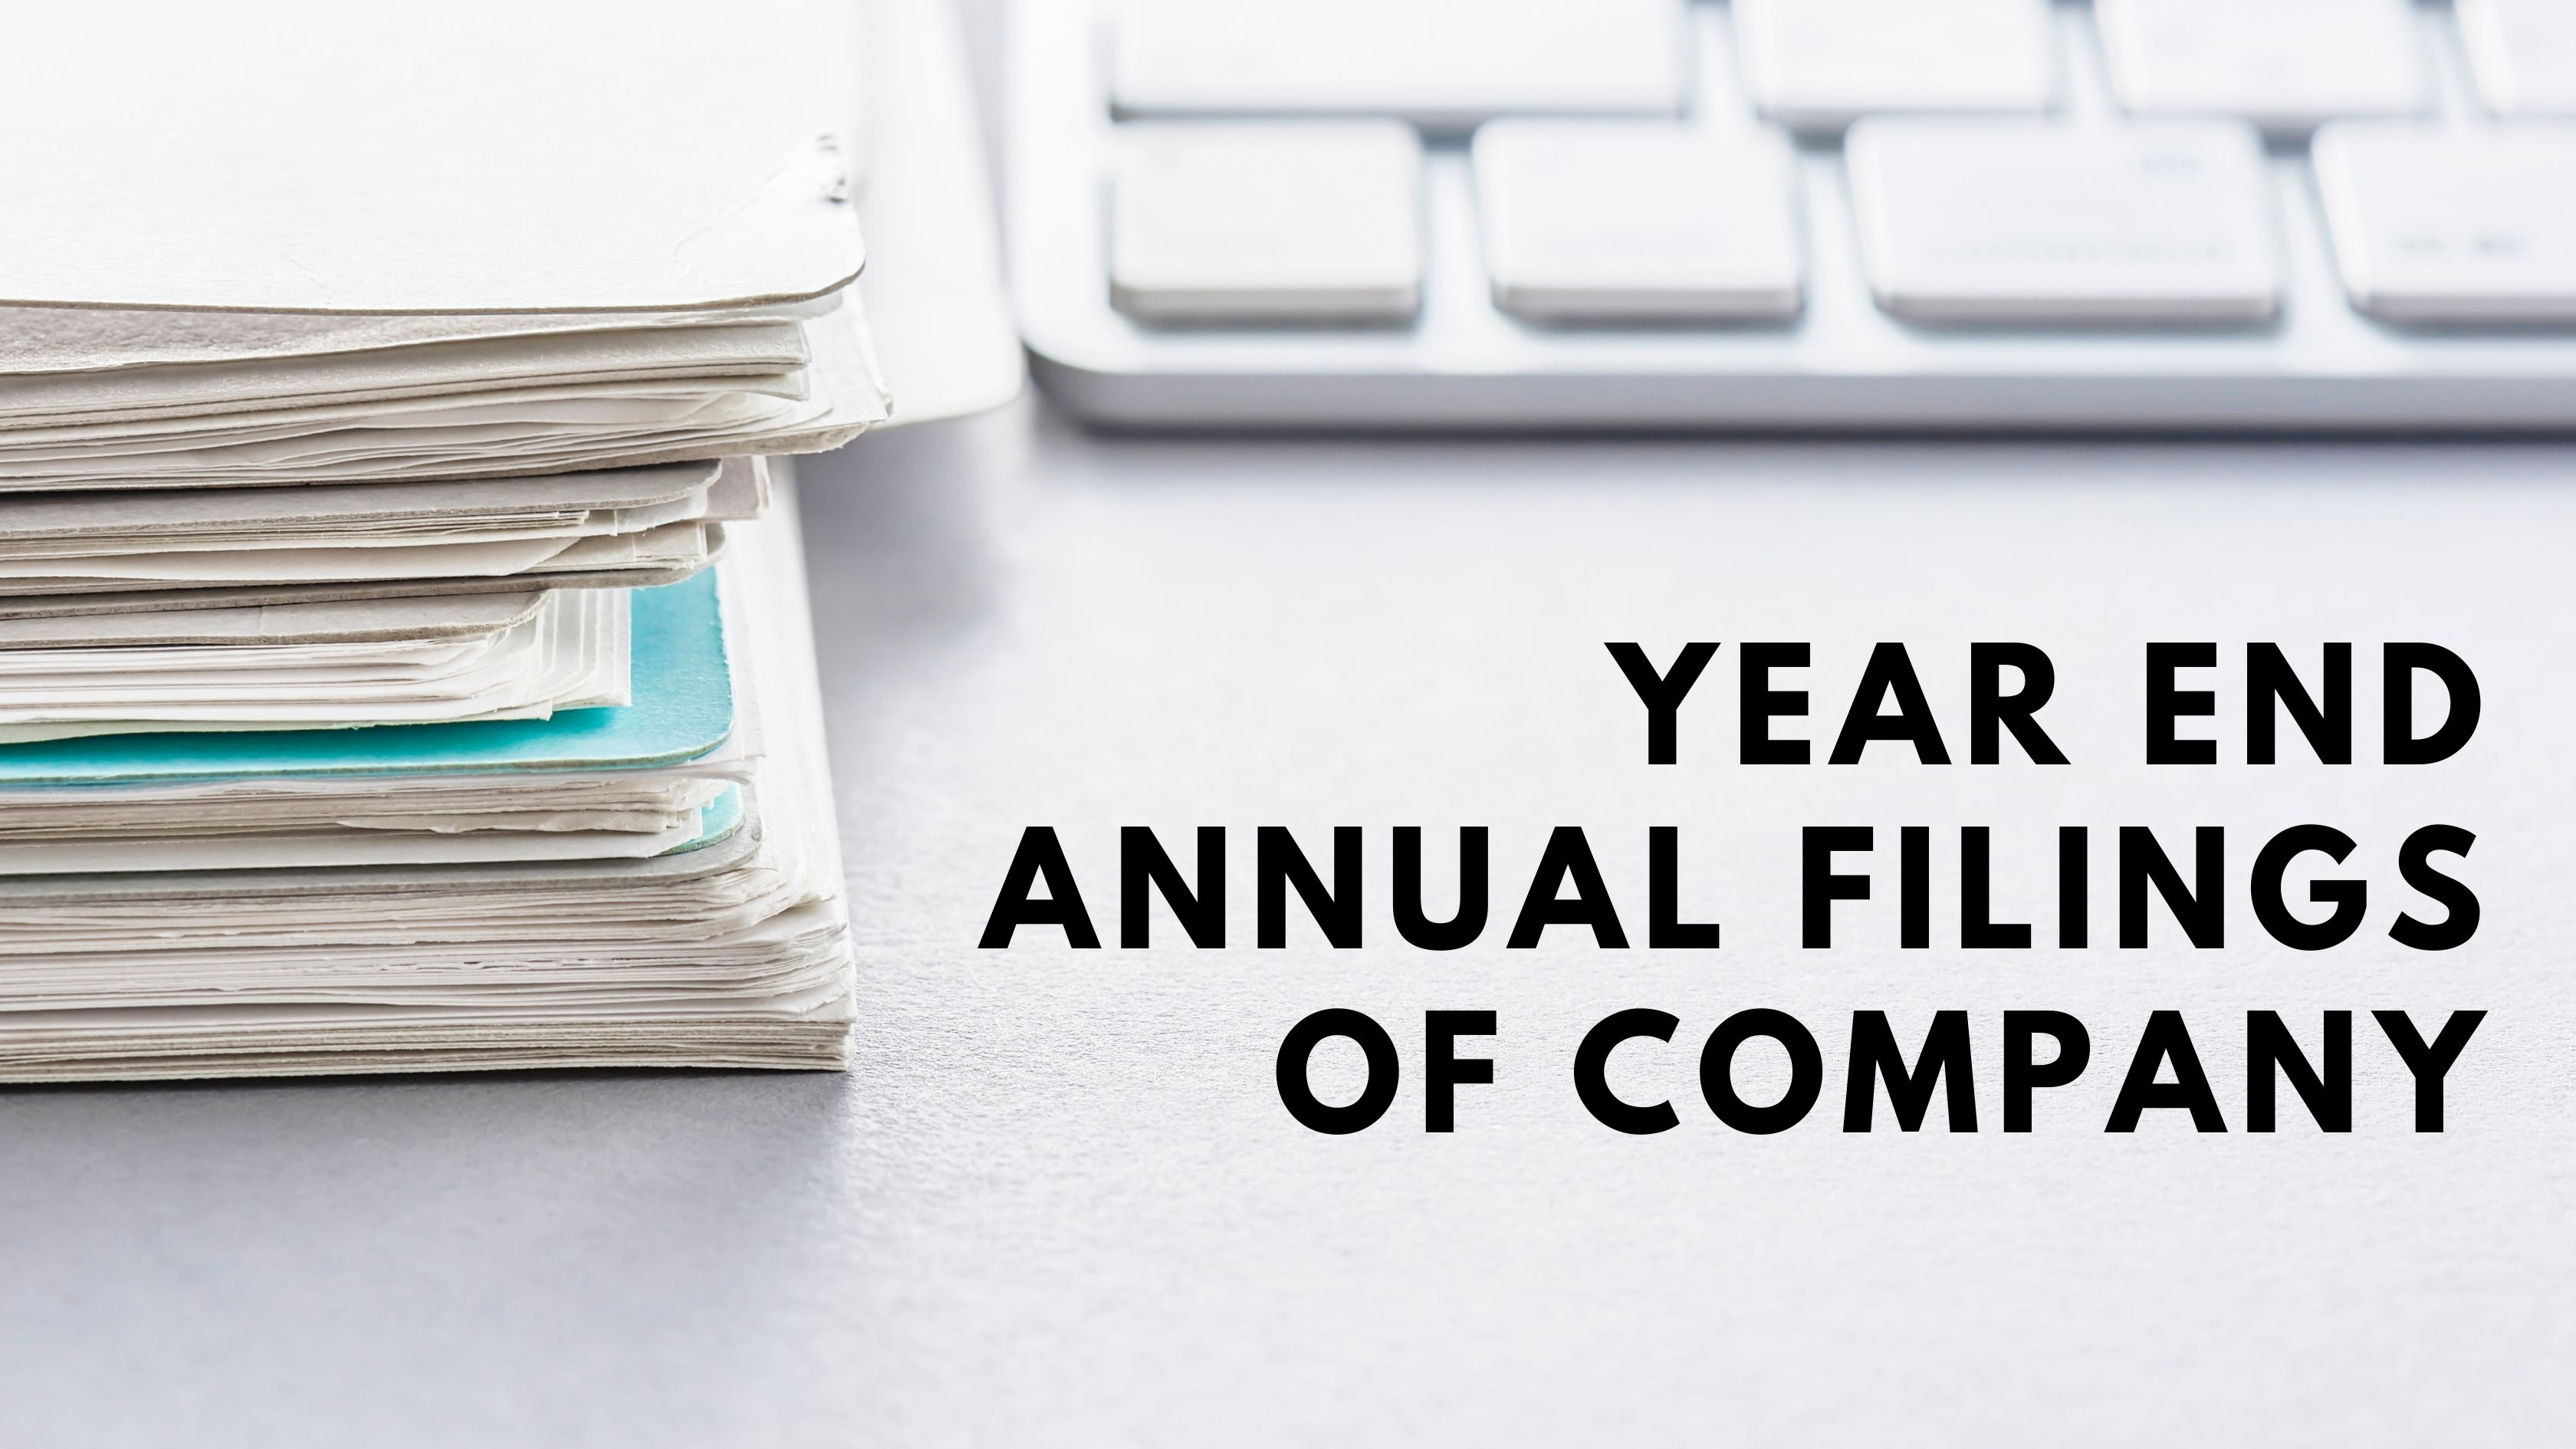 Annual filings of Company